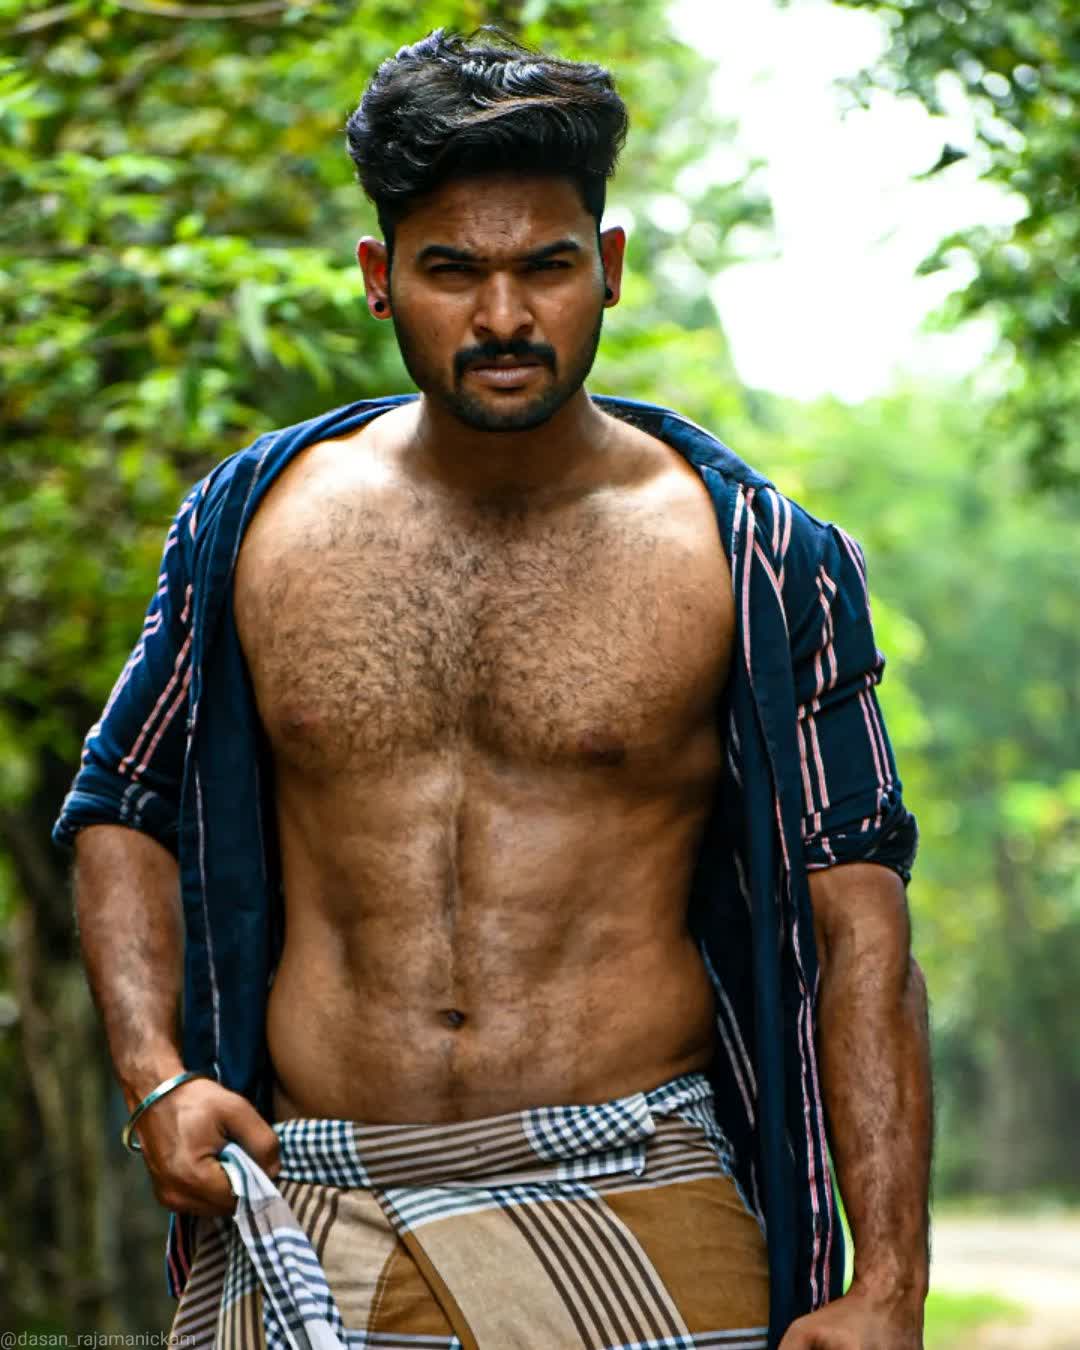 adamtitanmen on X: RT @adamtitanmen: Ultimate sexy tamil boyfriend :)  t.coDsIDc7sOEJ  X